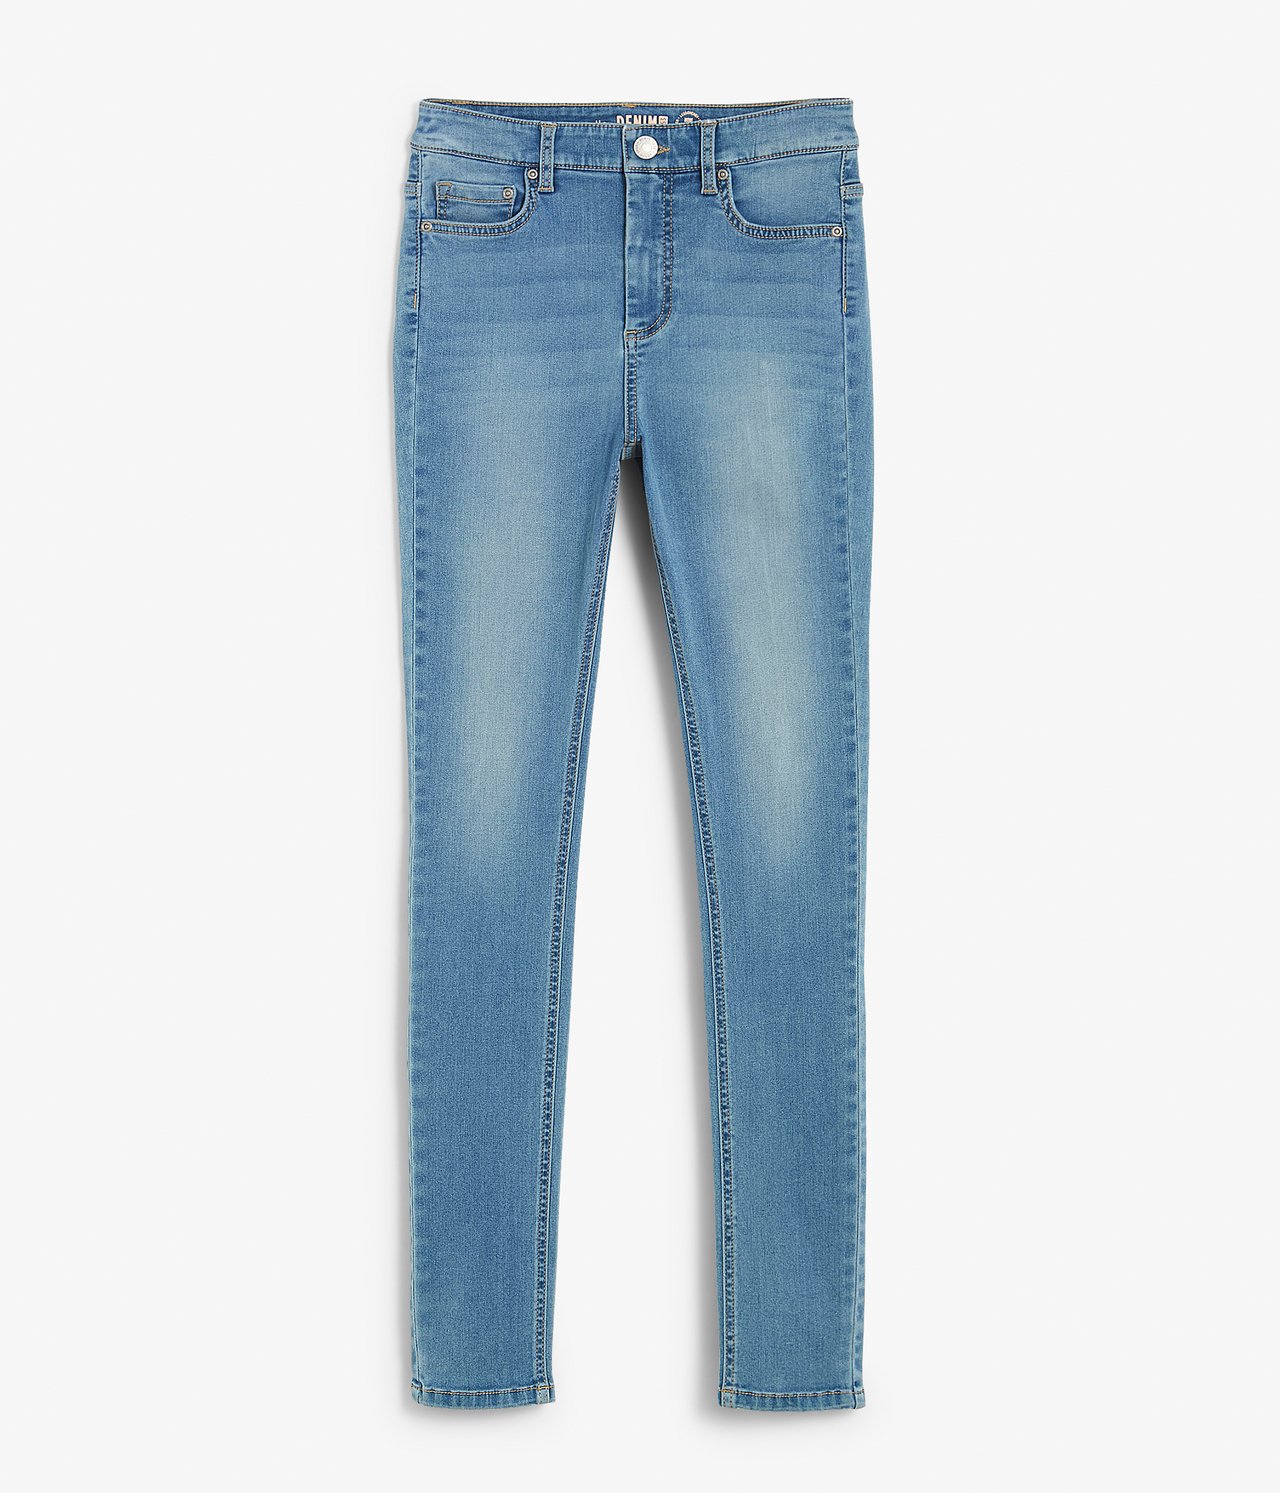 Super slim jeans short leg - Denim - 9